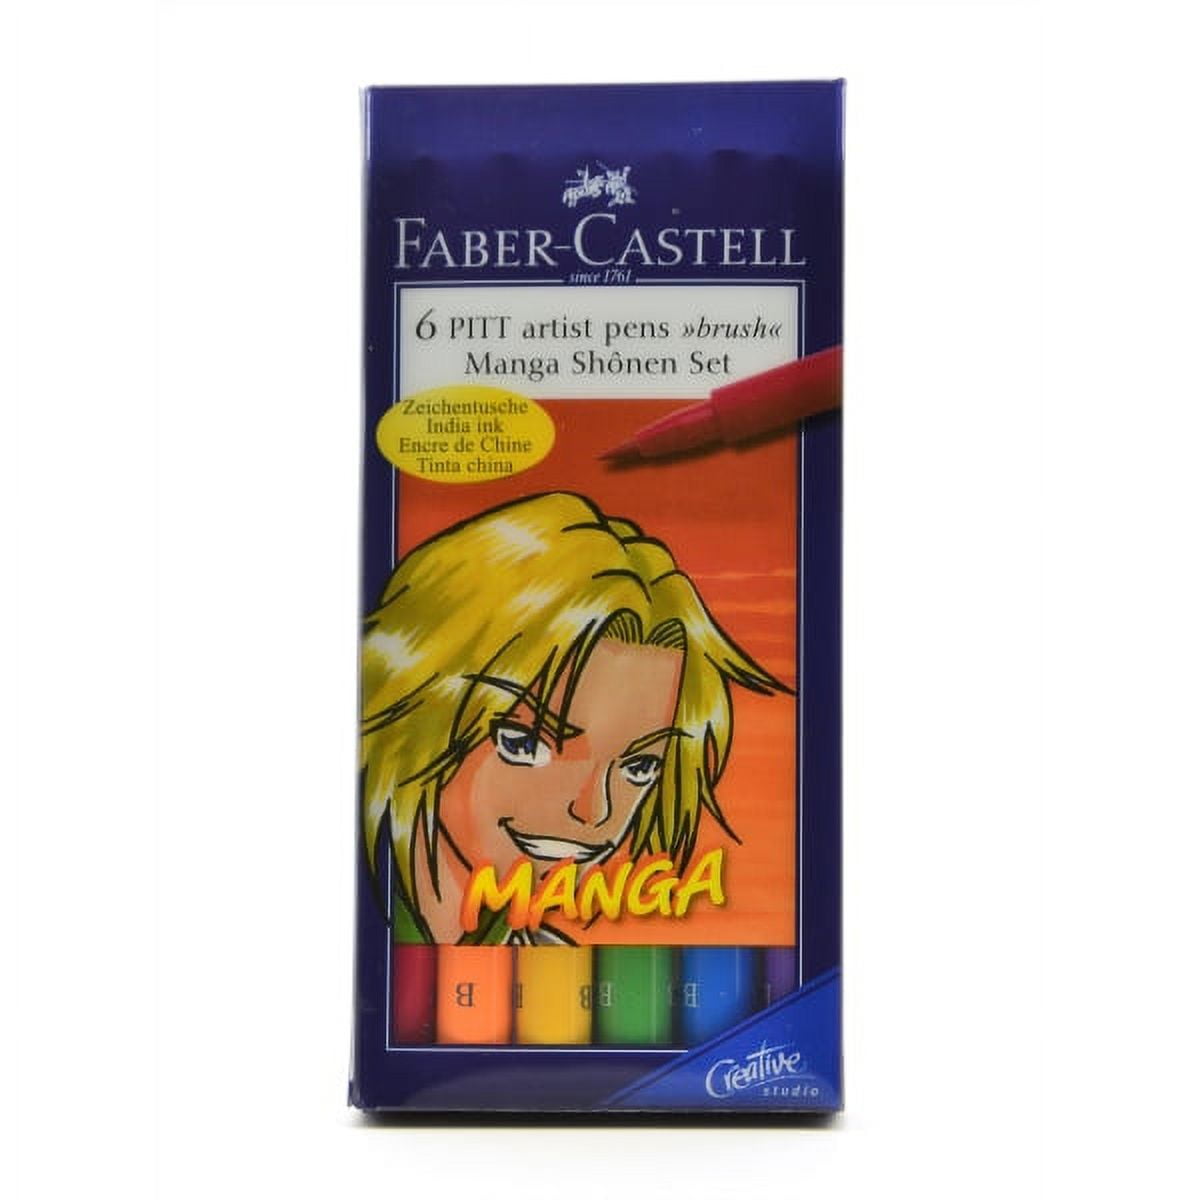 Faber Castell Complete MANGA Drawing Art Starter Kit: Manga Studio